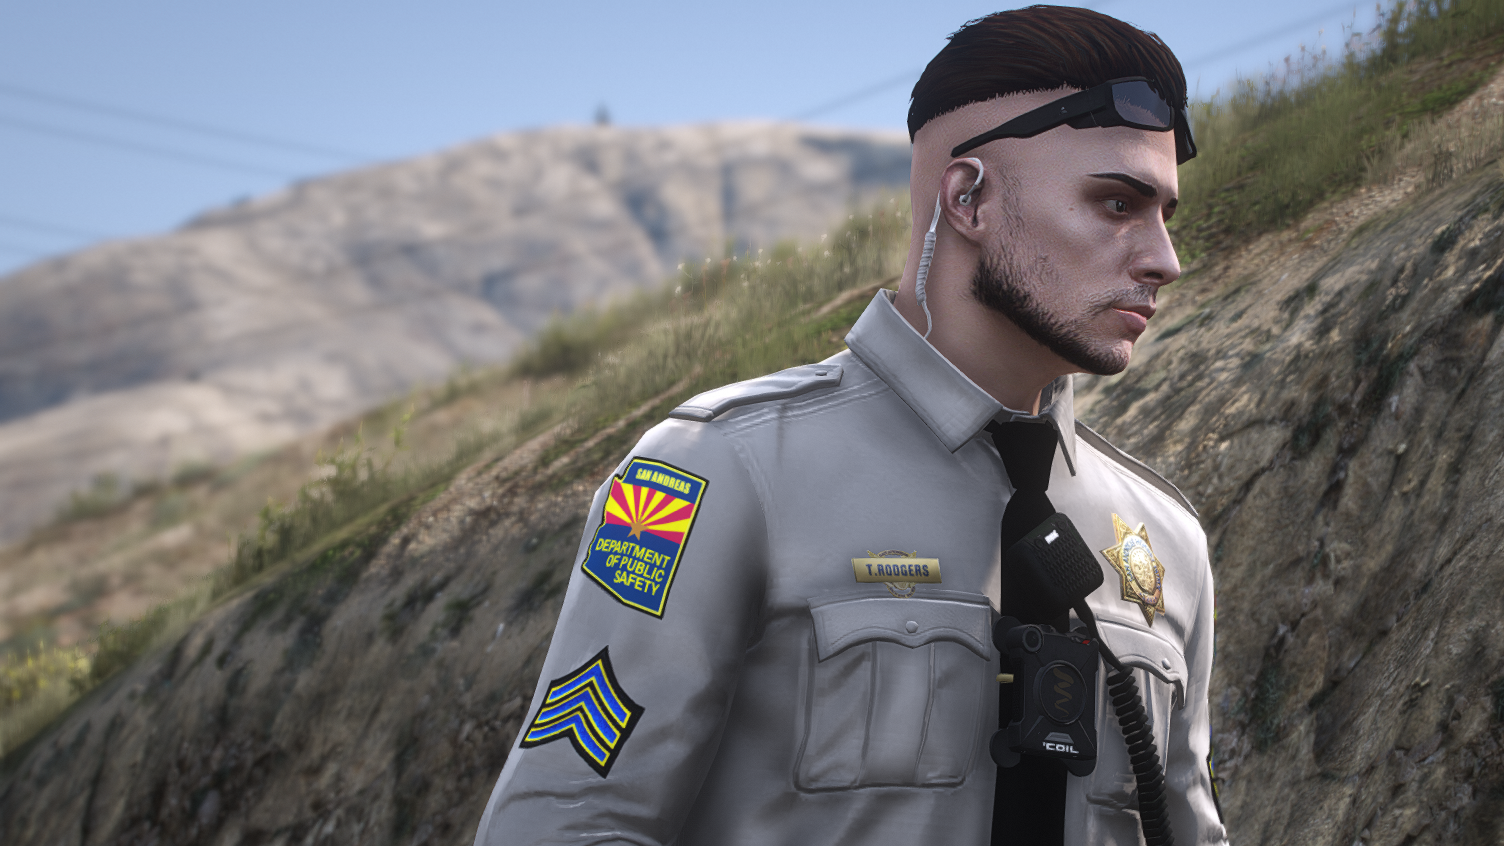 Download Copy to Arizona server mod for GTA San Andreas